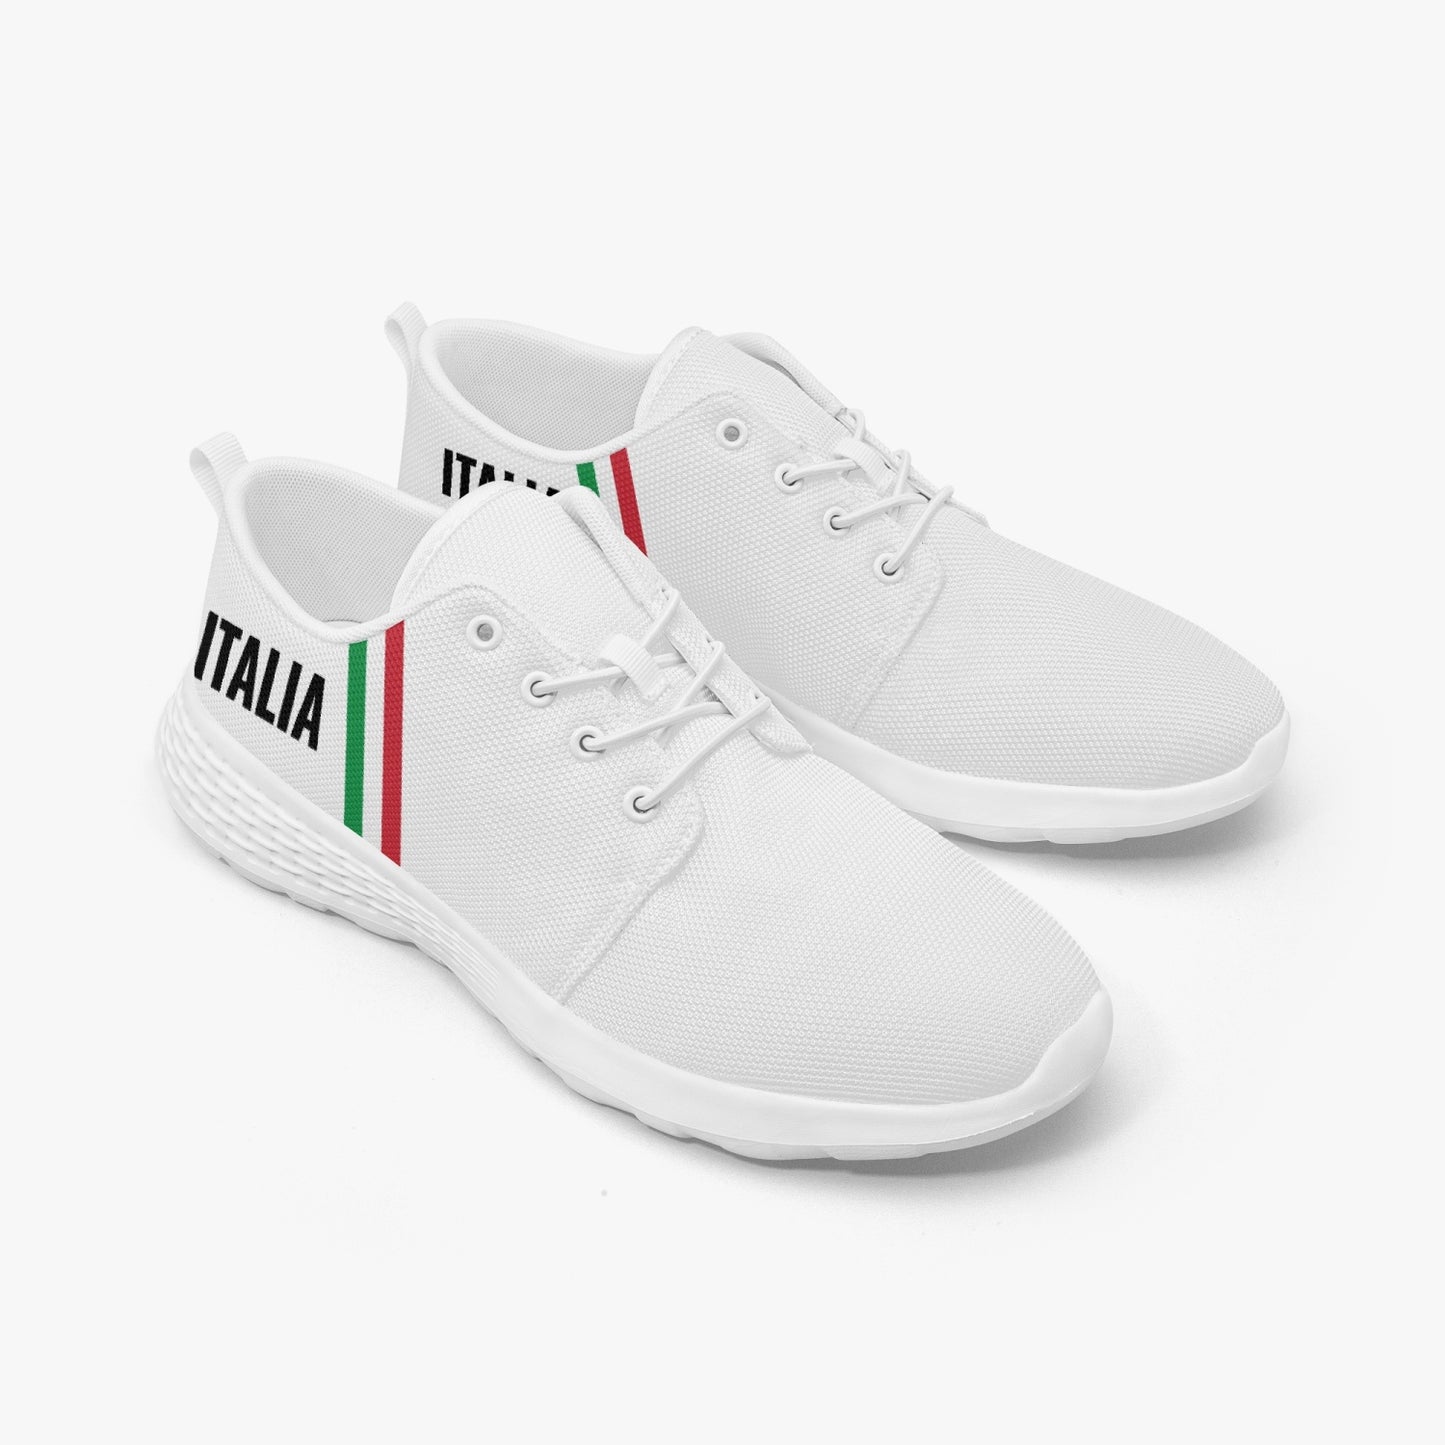 Italy Running Shoes - men's /women's sizes